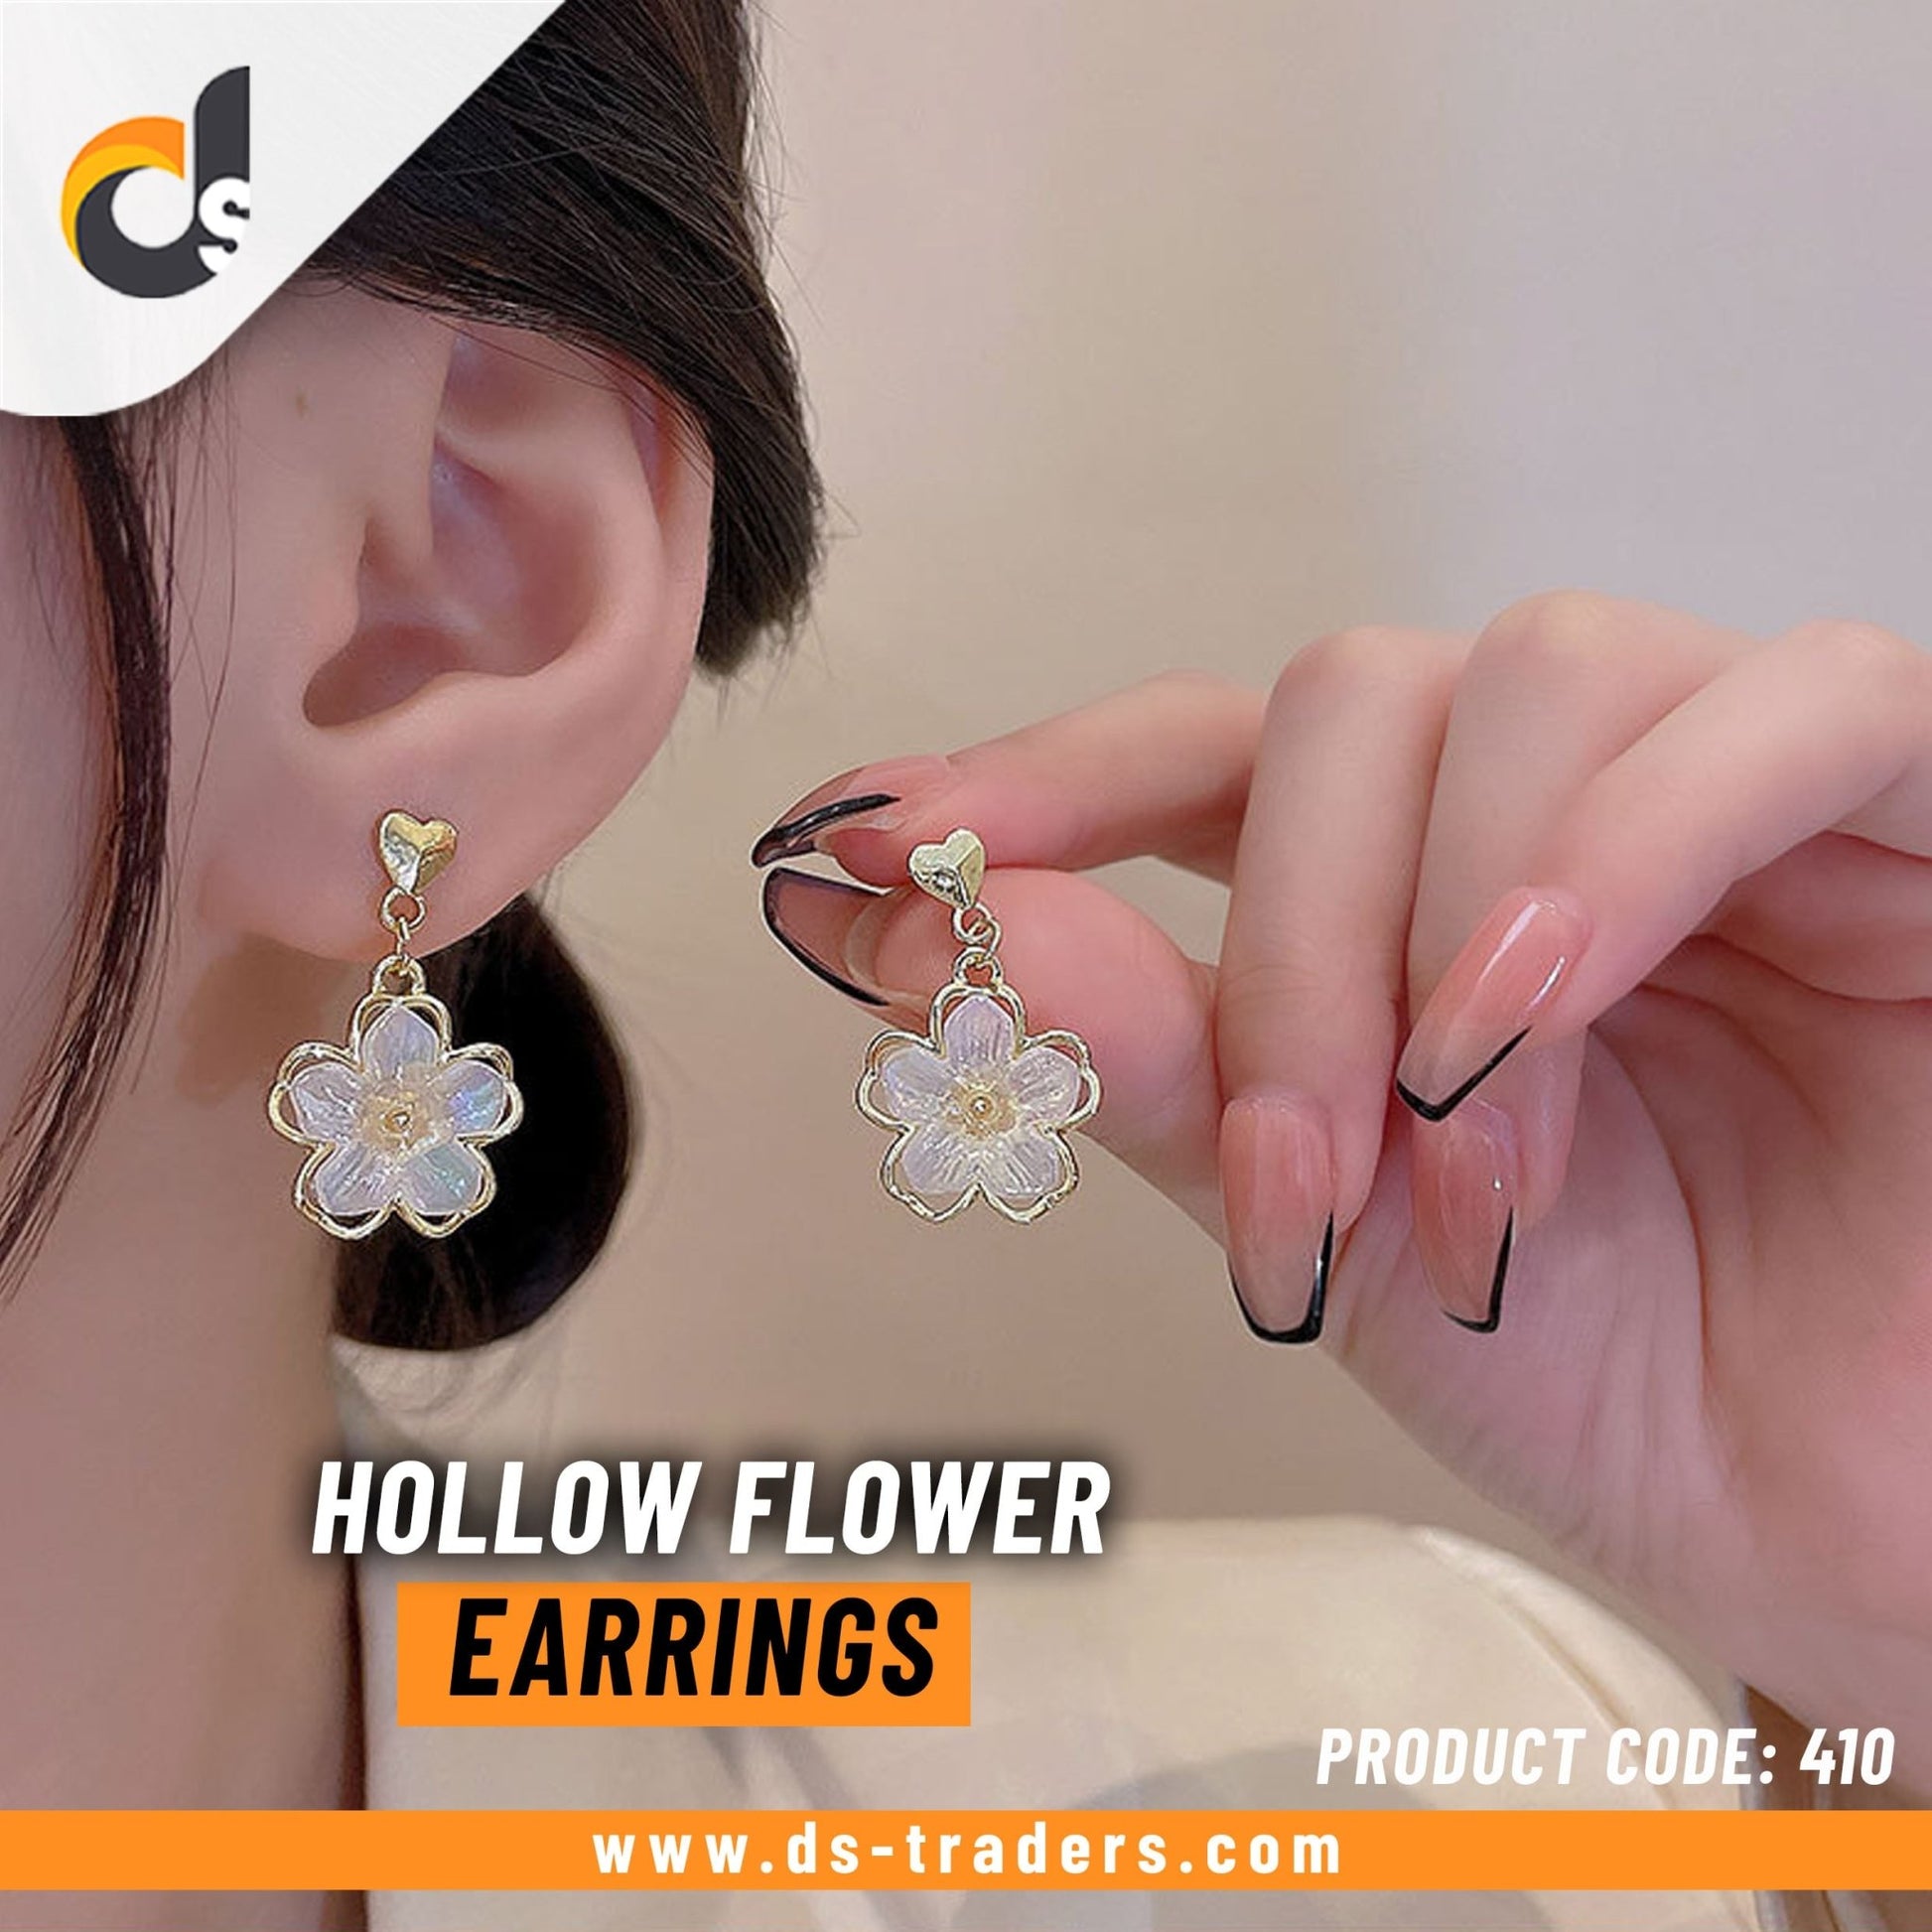 Hollow Flower Earrings - DS Traders